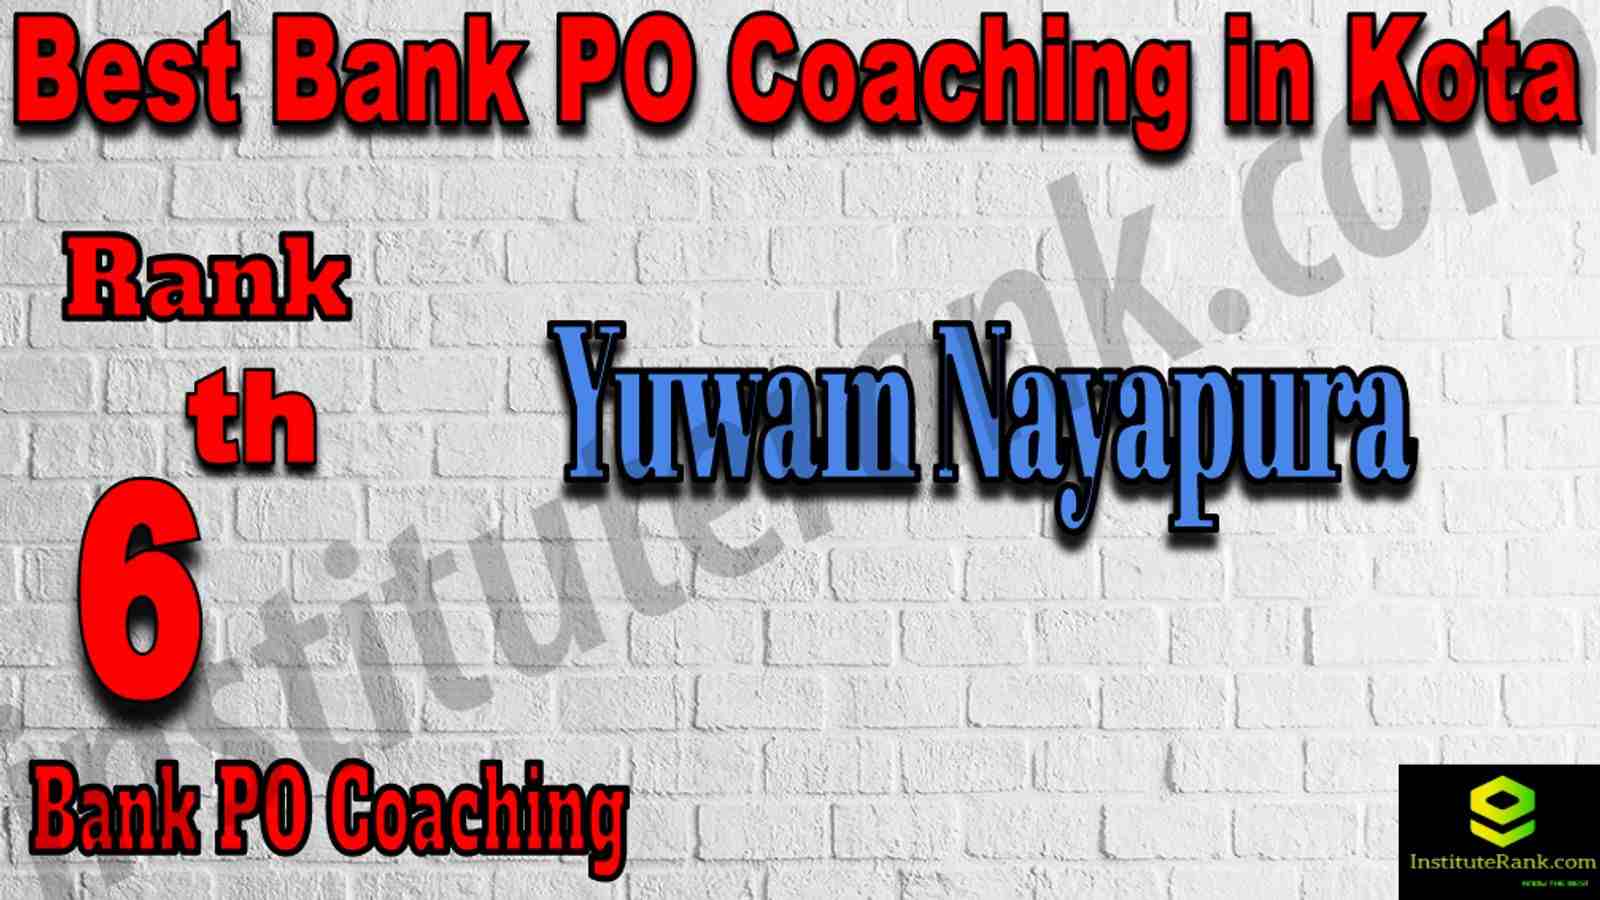 6th Best Bank PO Coaching in Kota